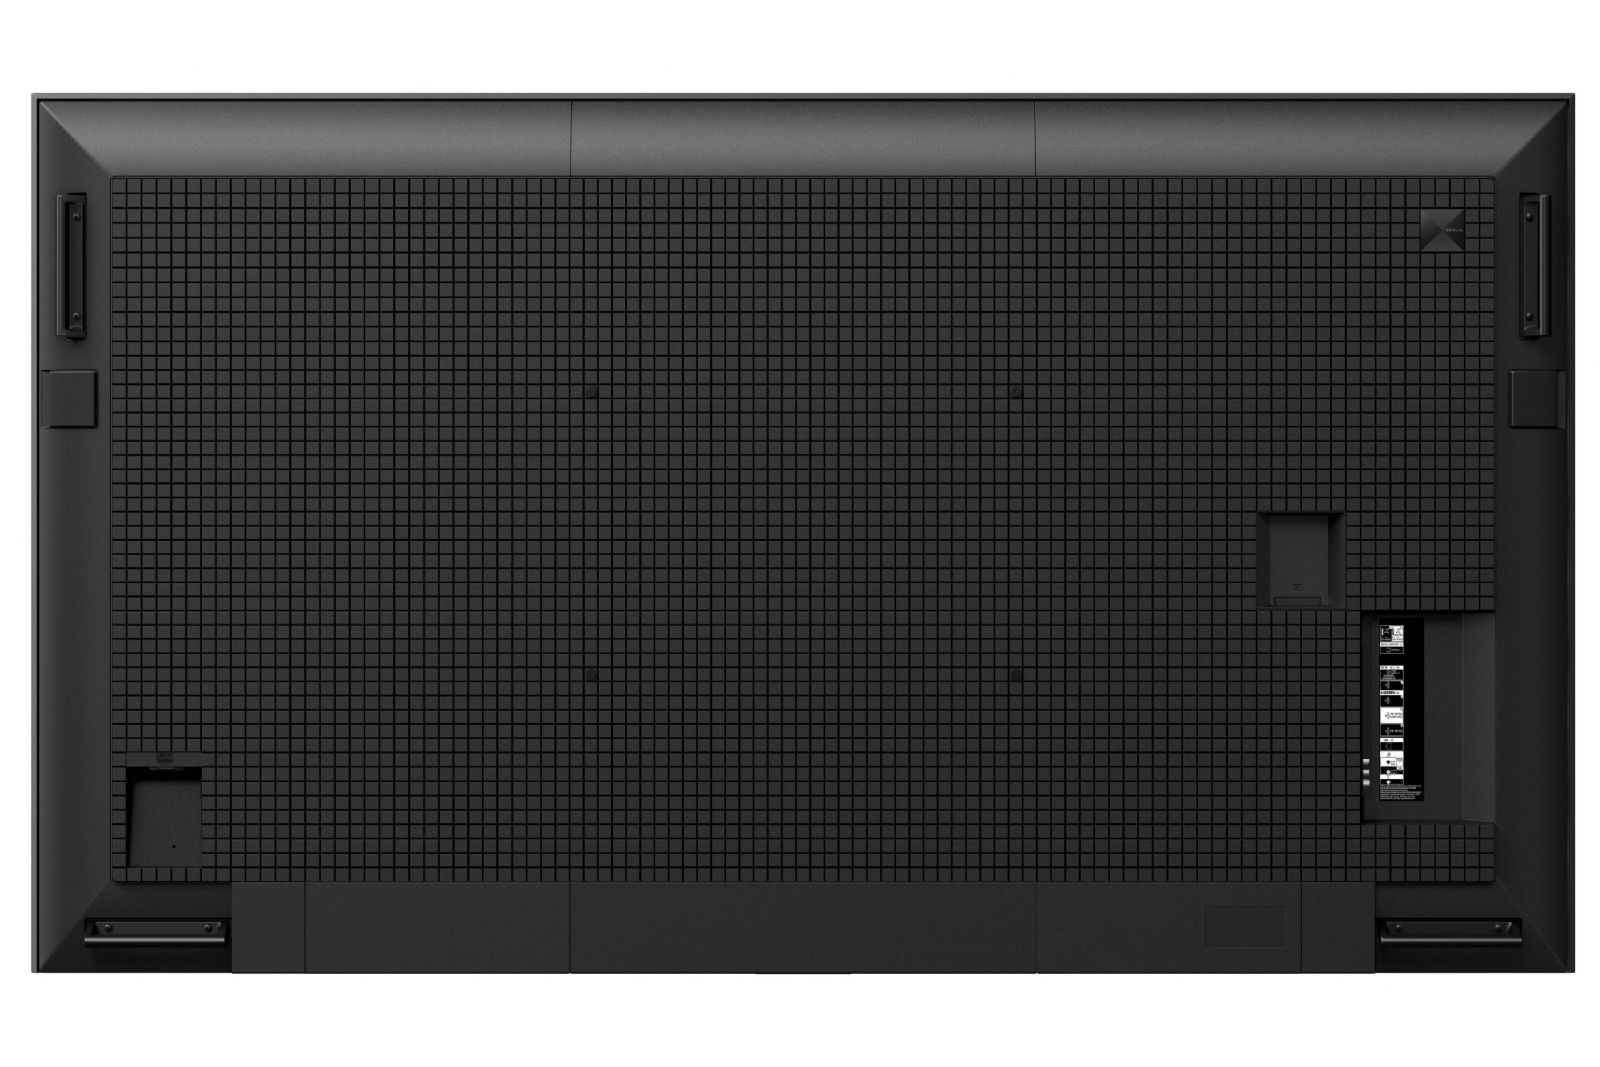 TV-apparater Sony XR-55X90L Bravia XR LED Google-TV